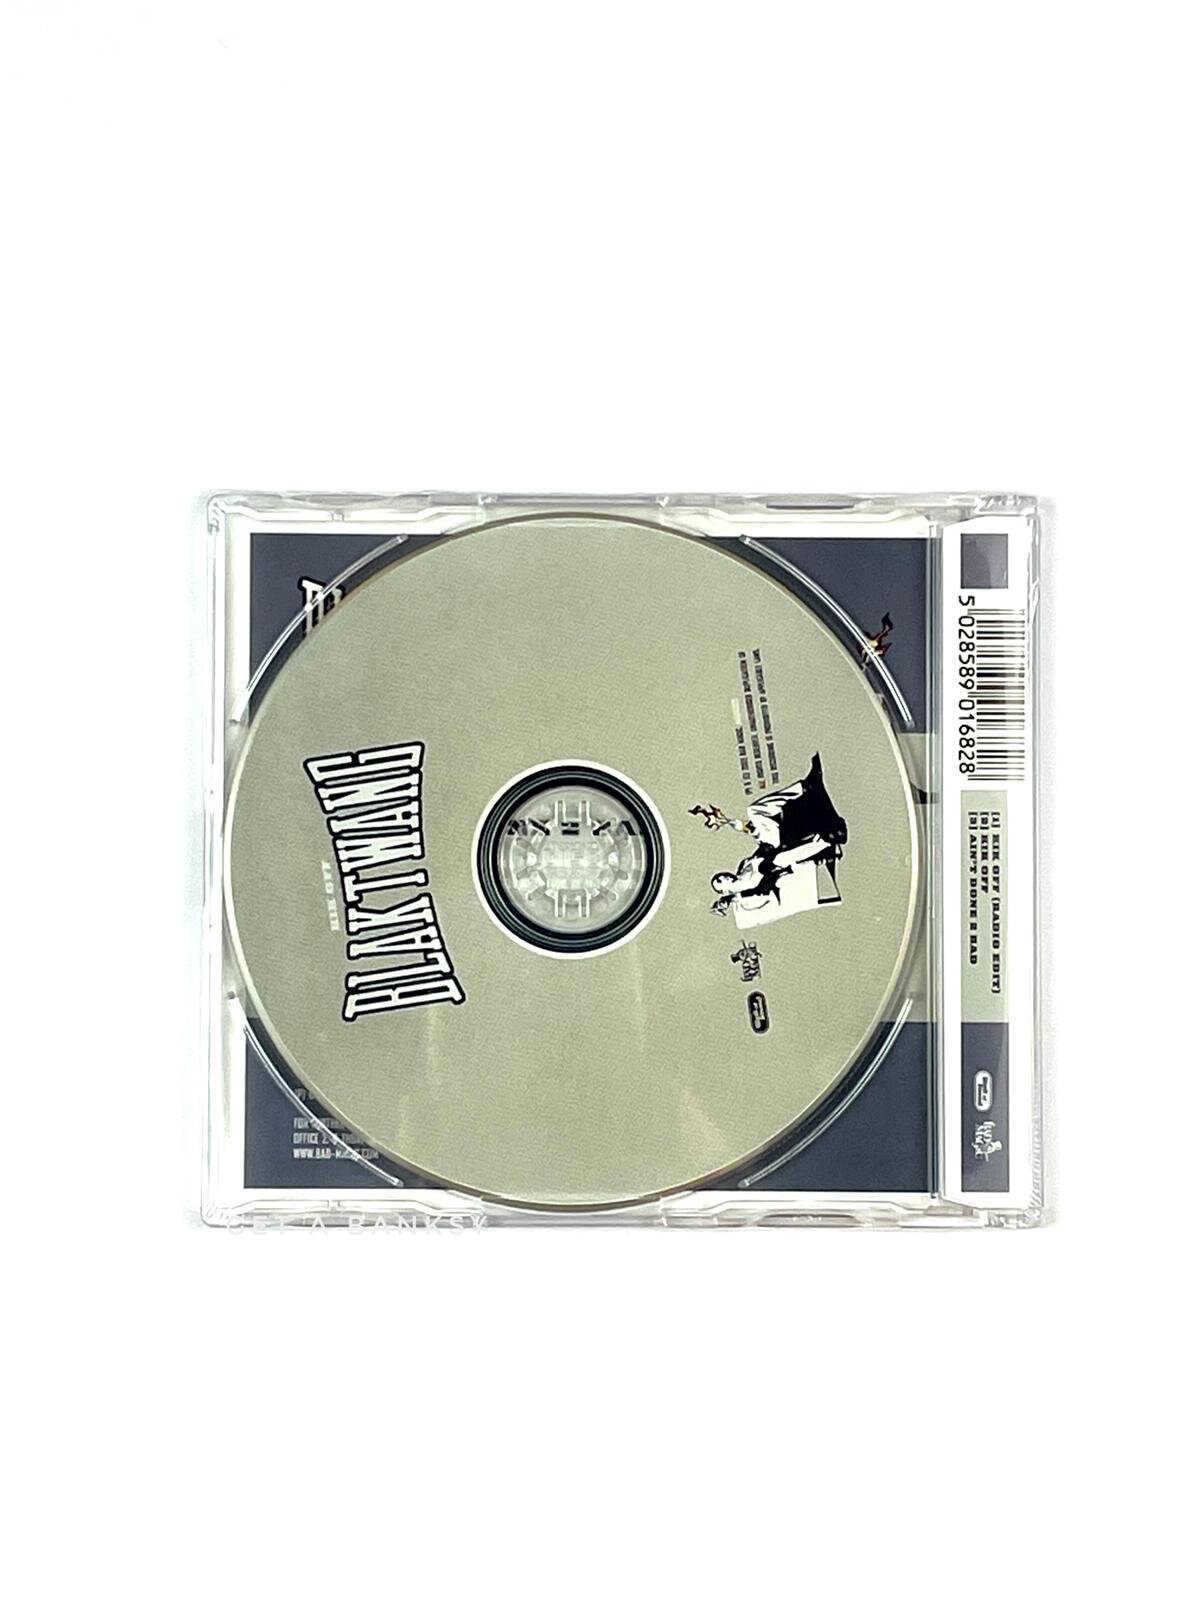 Blak Twang Kik Off CD - Sealed Brand new — Get a Banksy